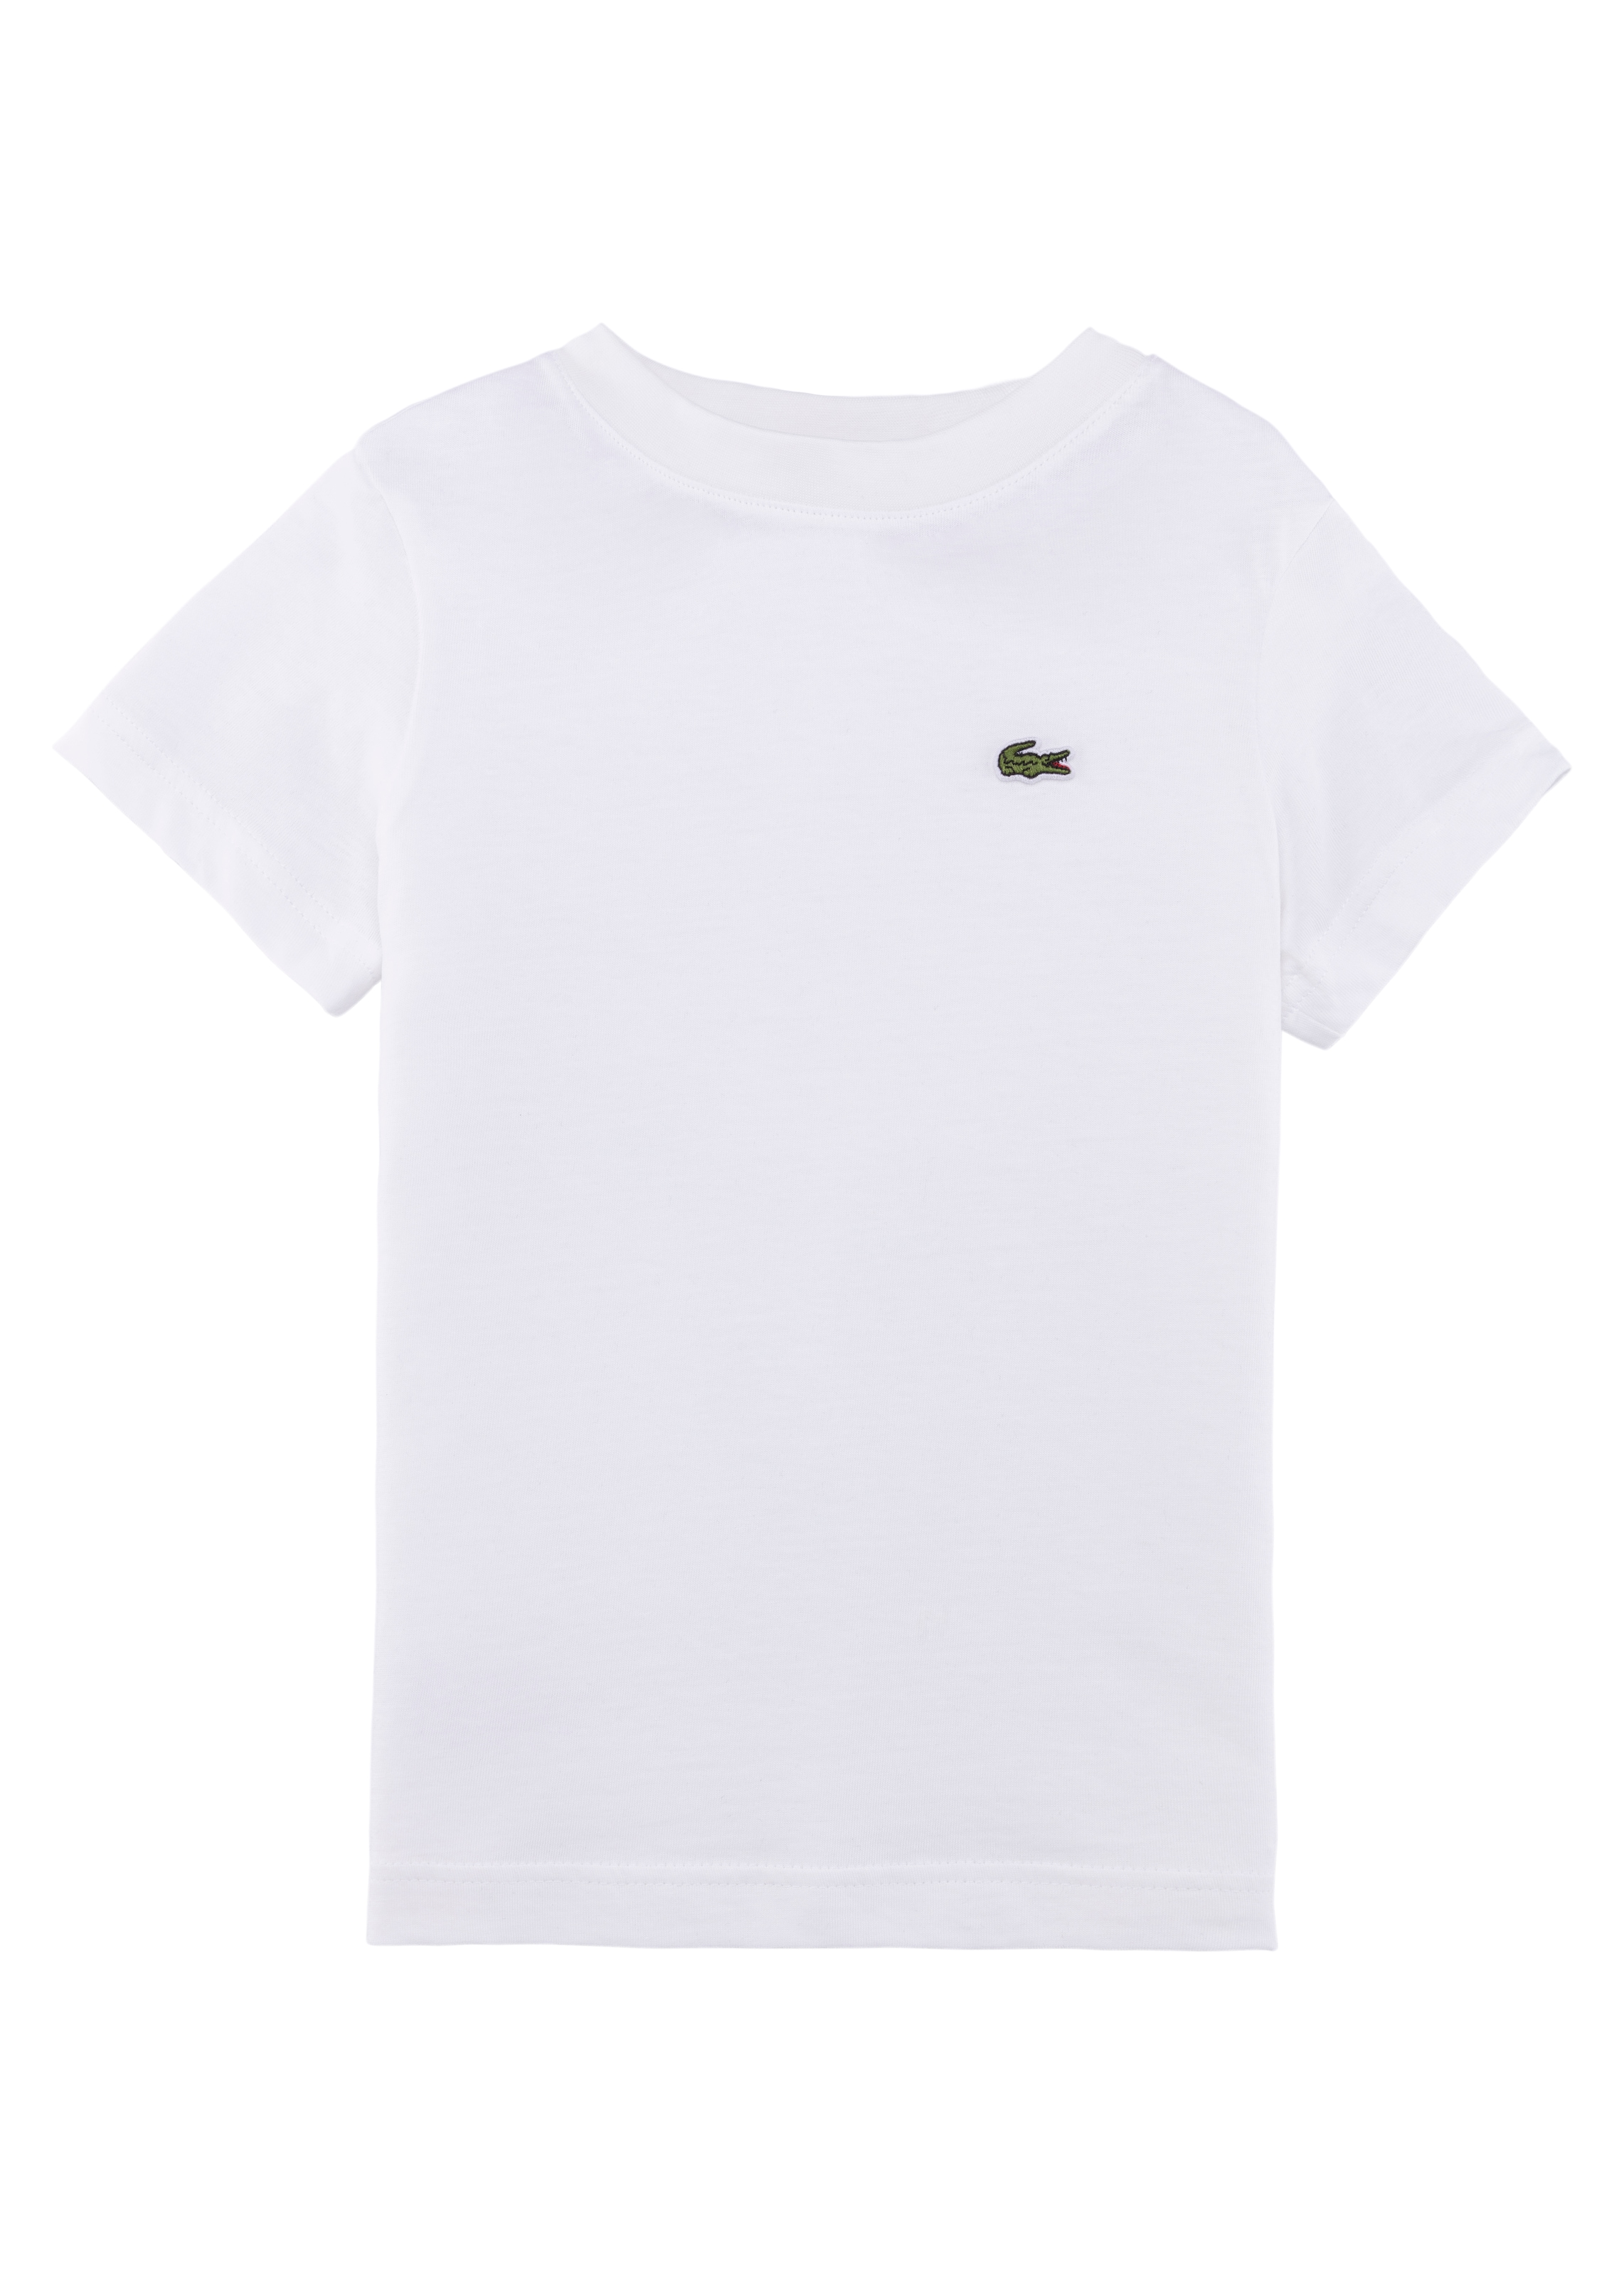 Lacoste T-Shirt, mit OTTO bei Lacoste-Krokodil Brusthöhe auf